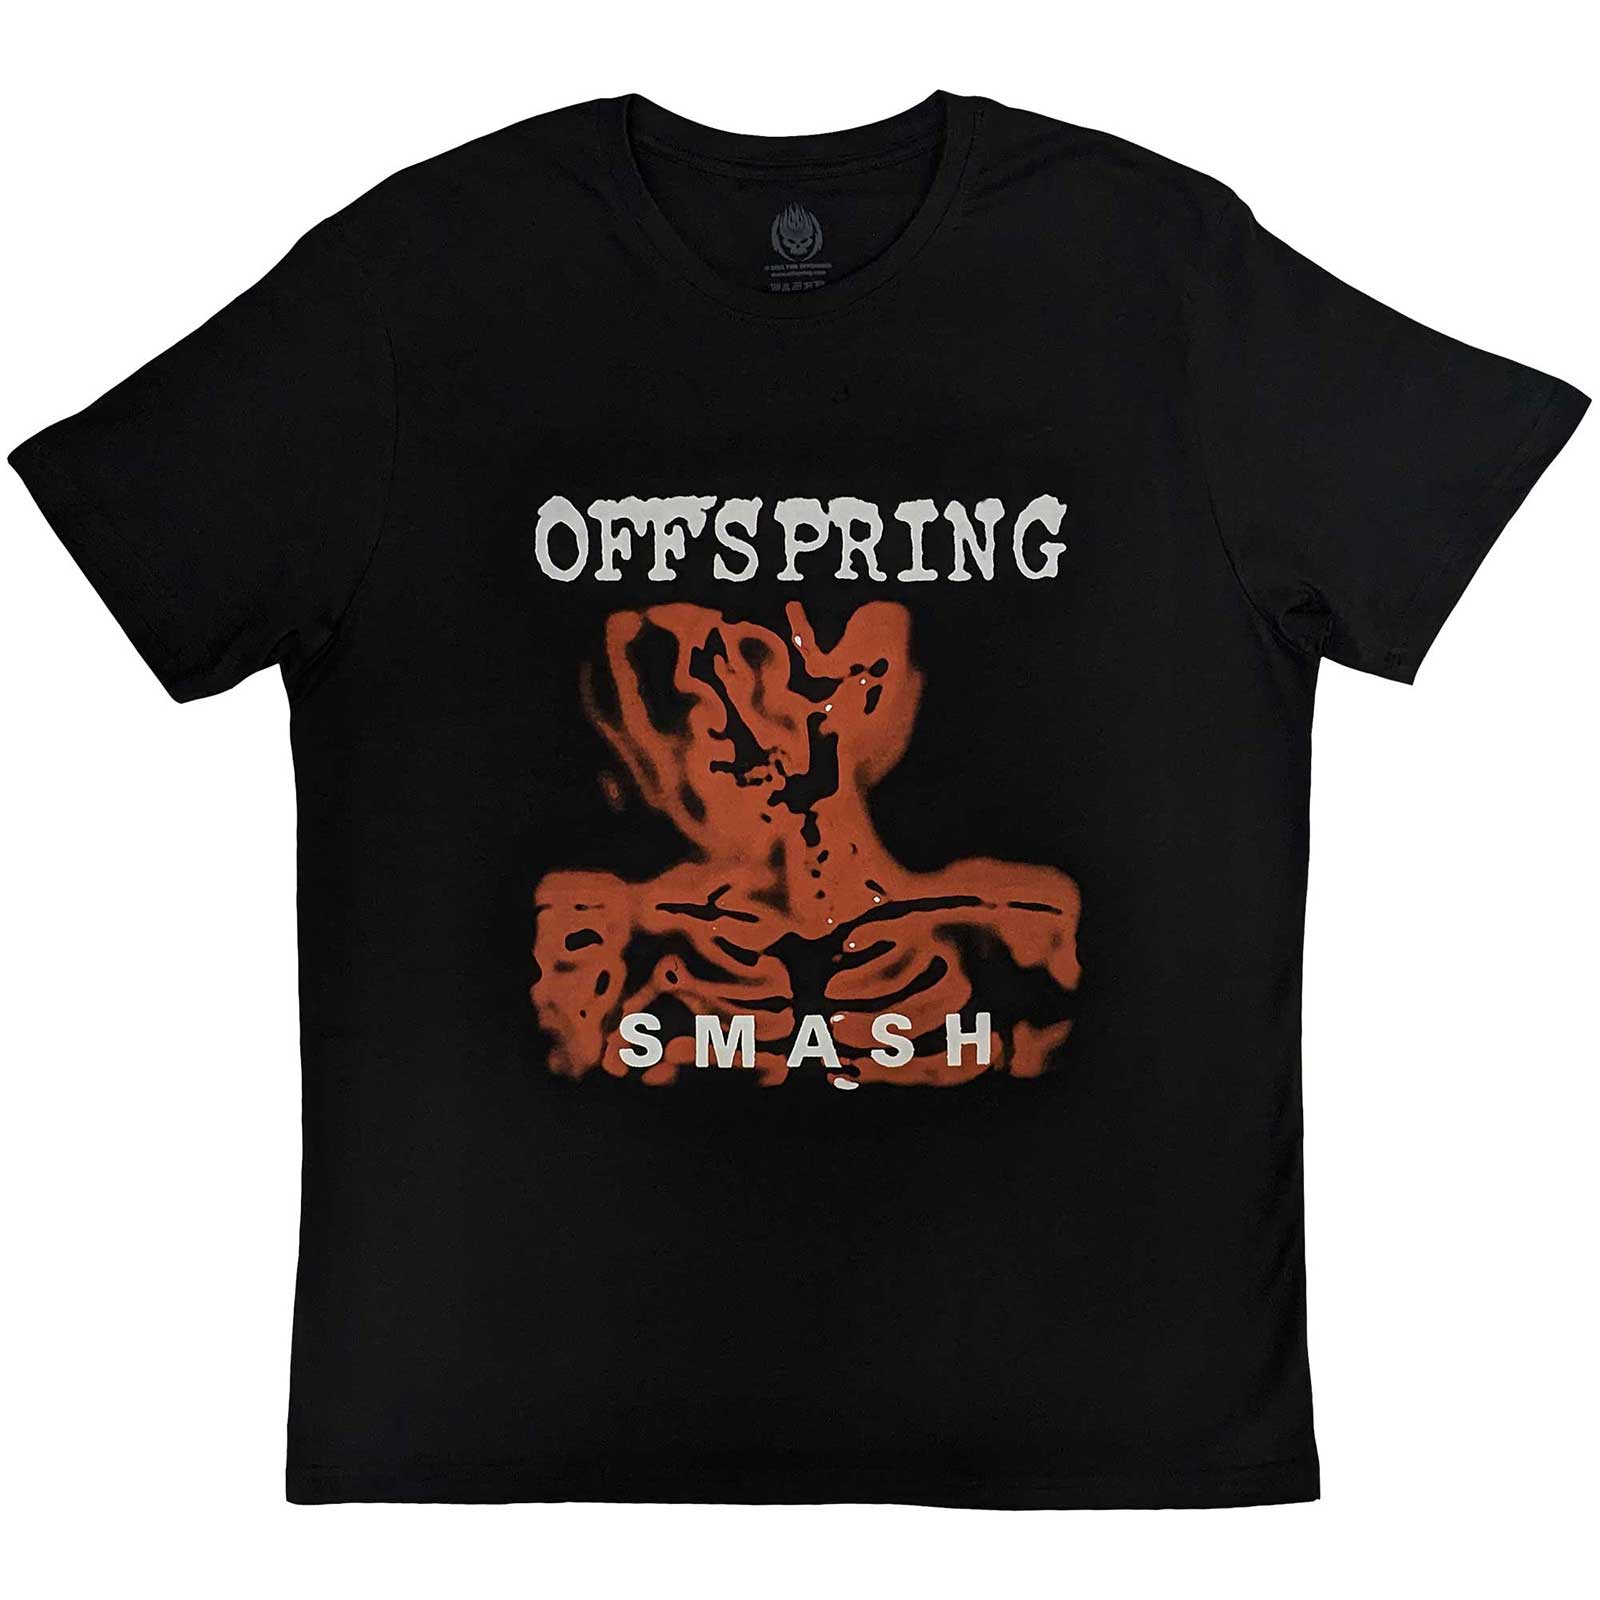 THE OFFSPRING Smash